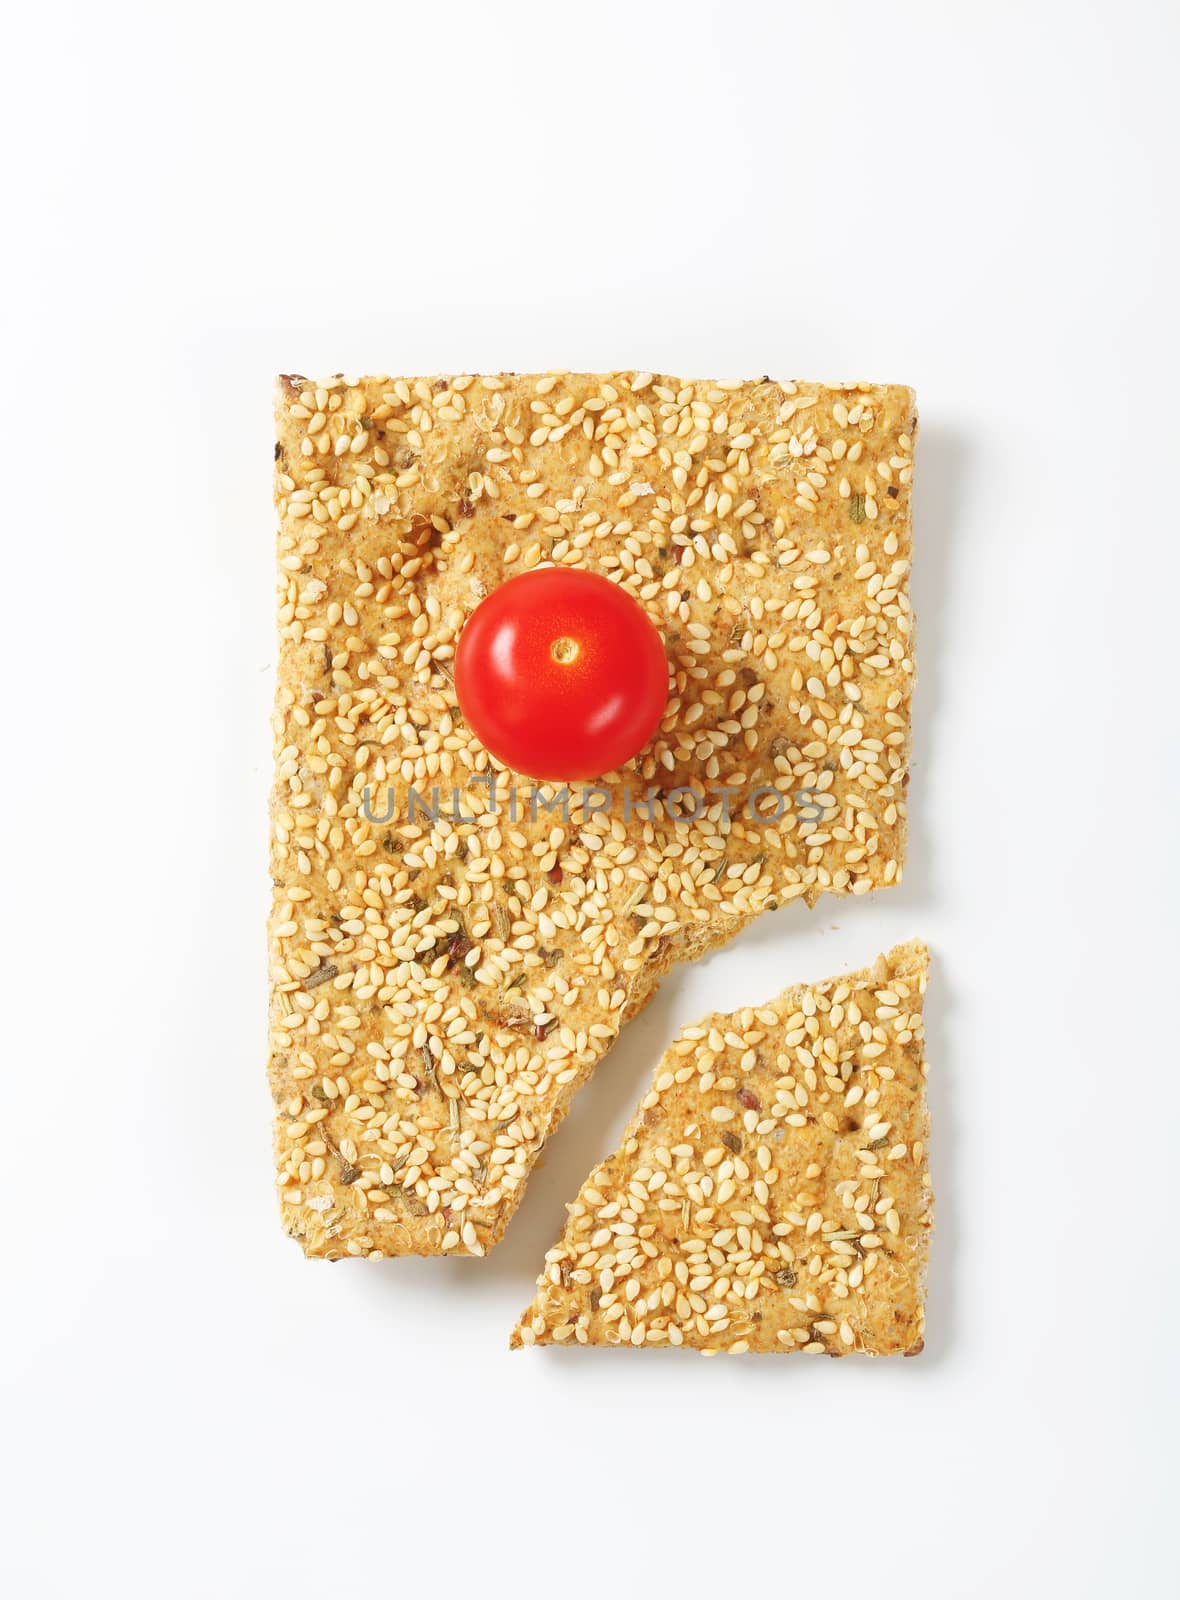 Sesame seed cracker by Digifoodstock